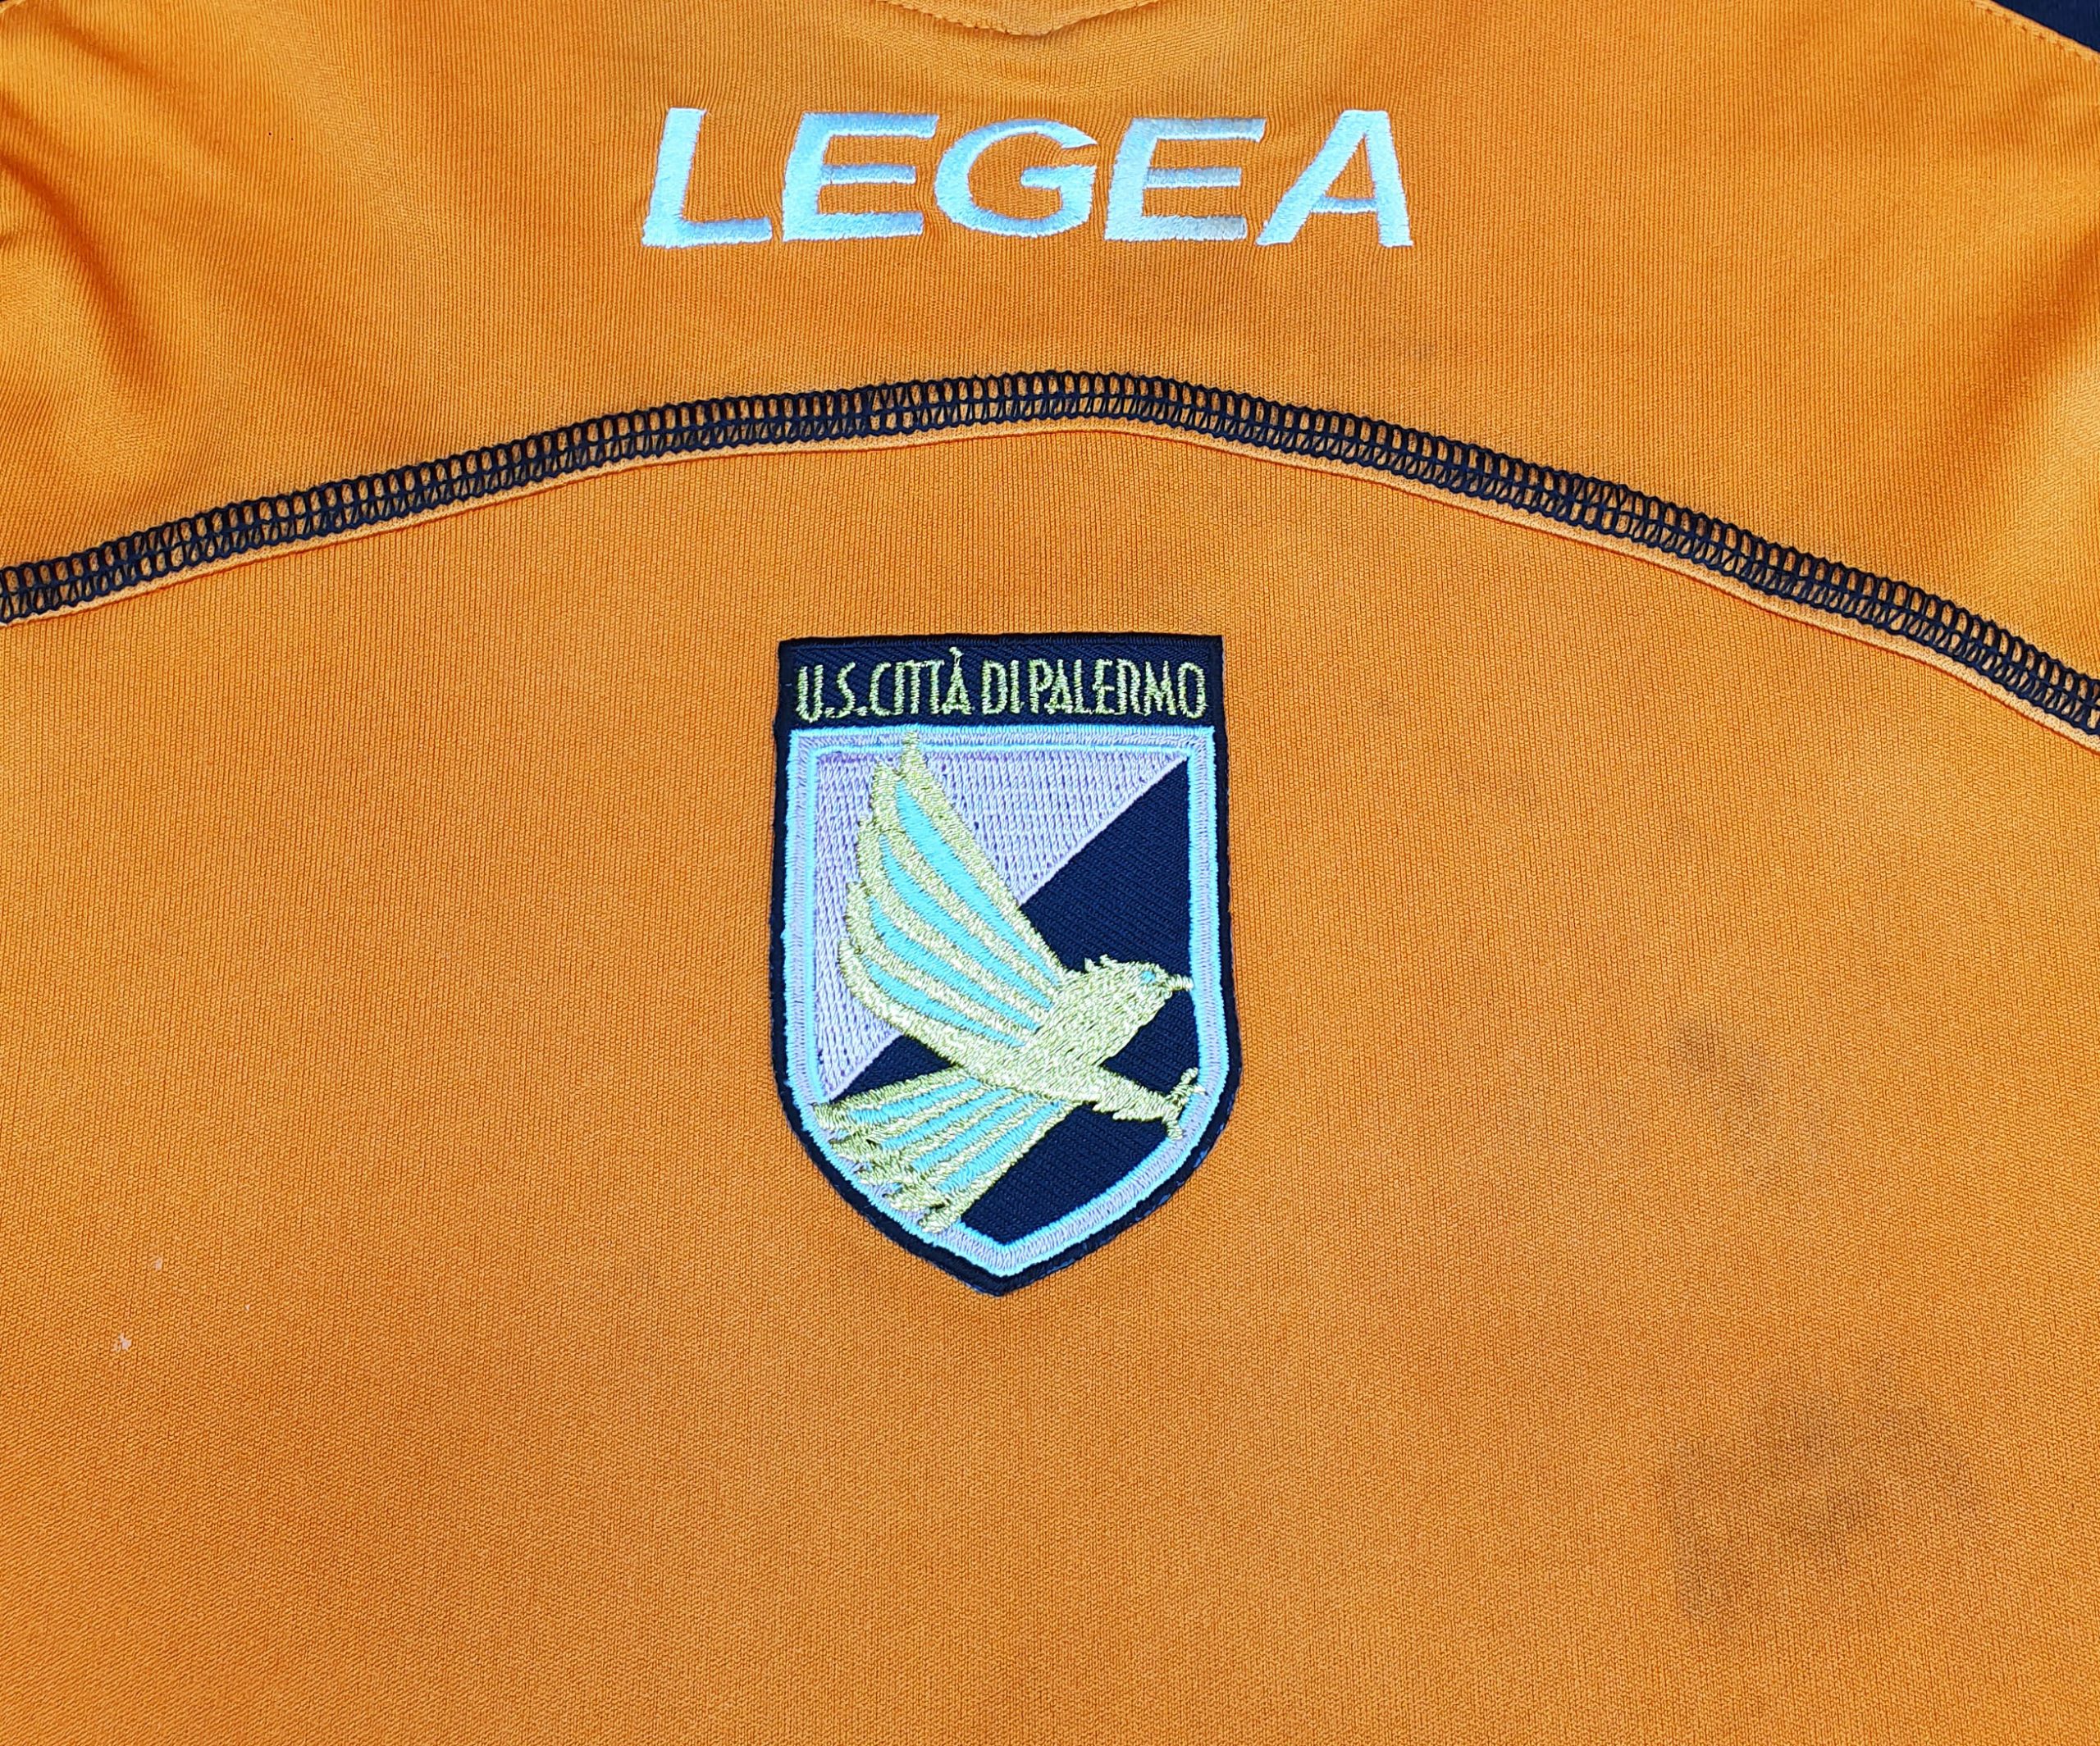 Legea Palermo 2011/12 football shirt 